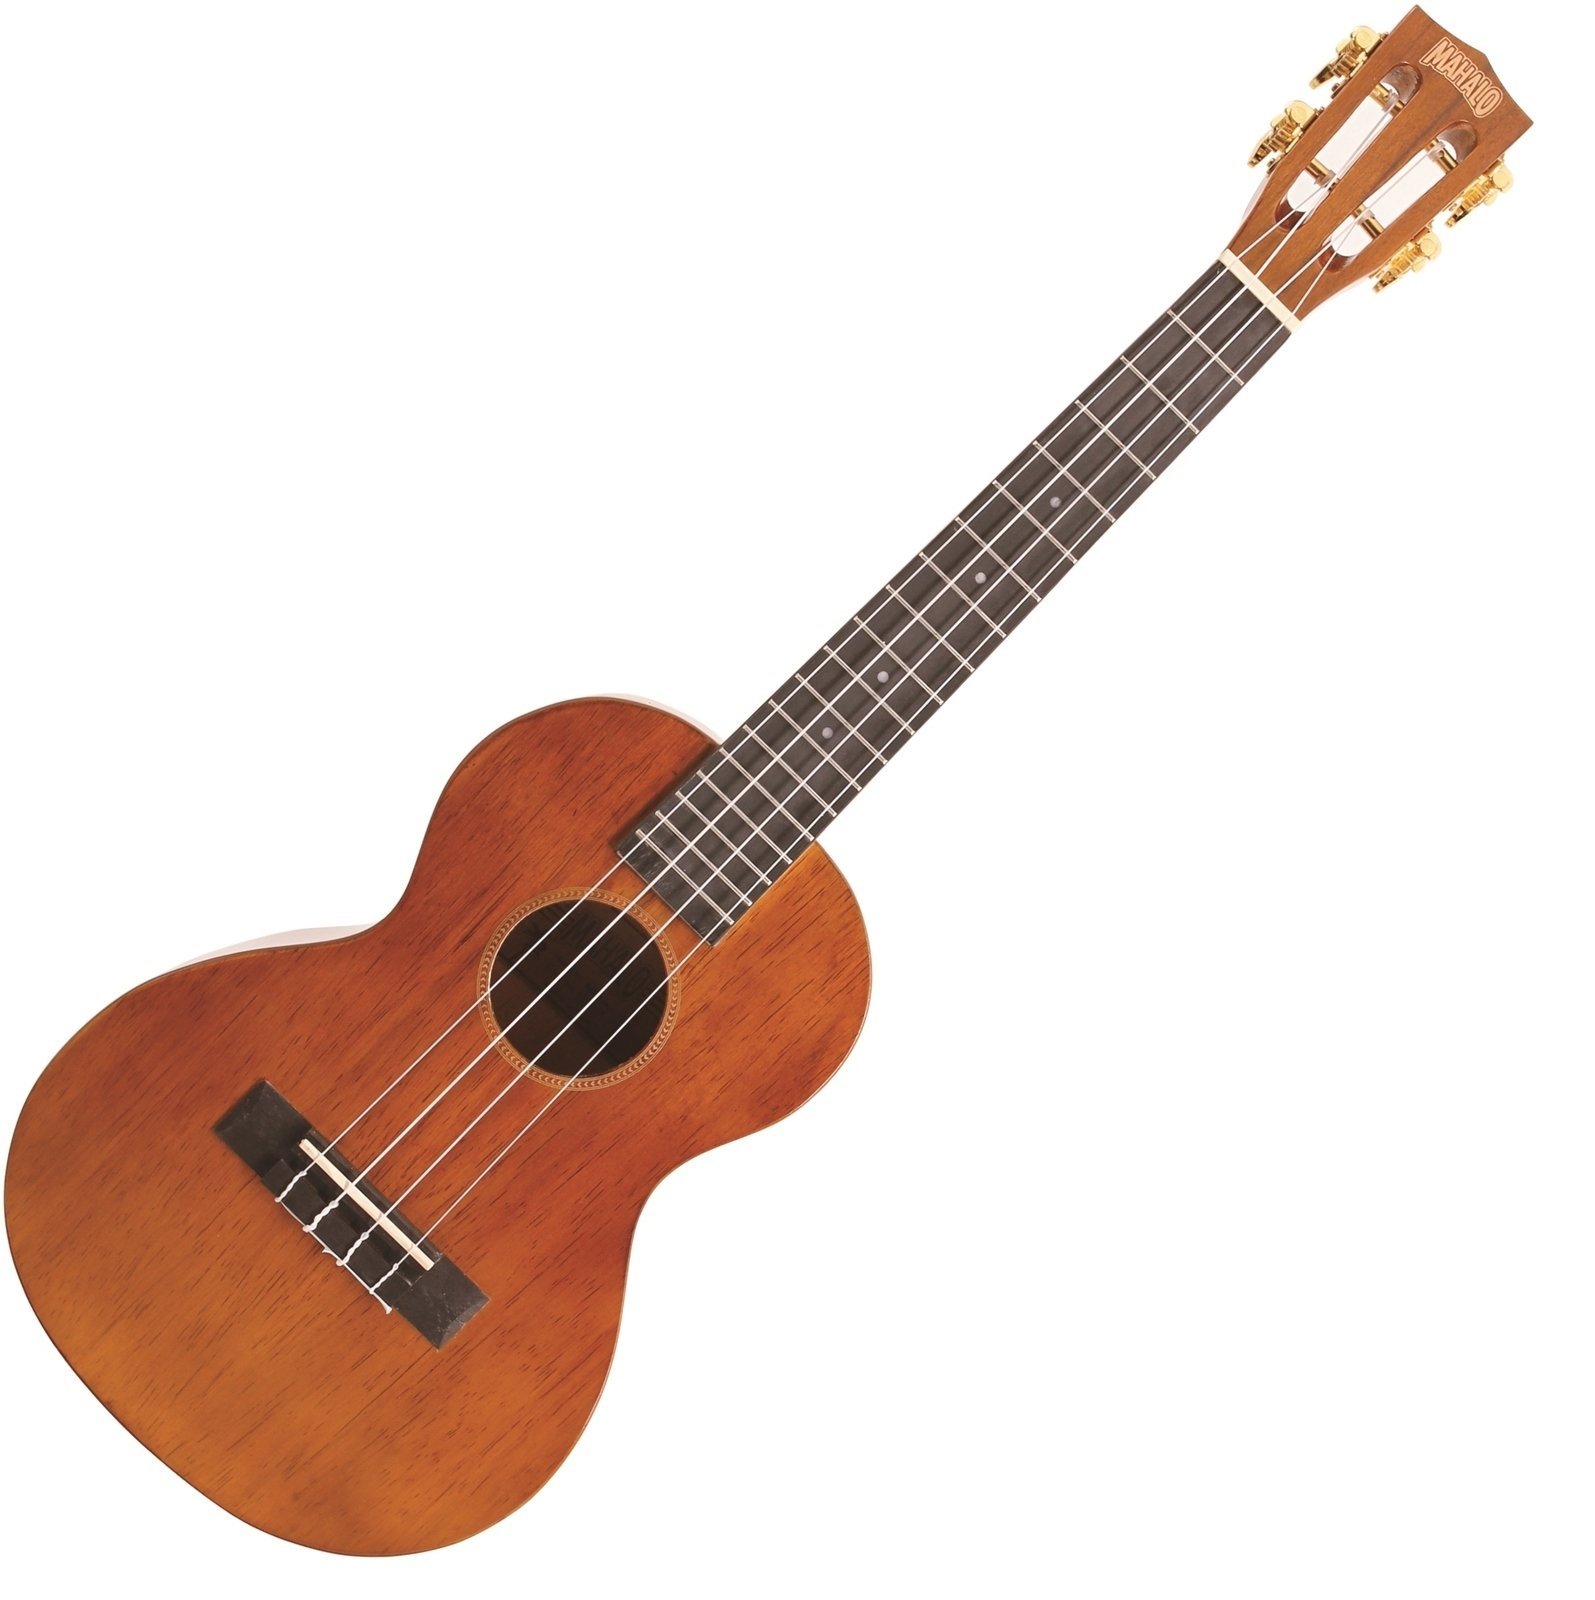 Tenorové ukulele Mahalo Electric-Acoustic Tenor Ukulele Cutaway Vintage Natural